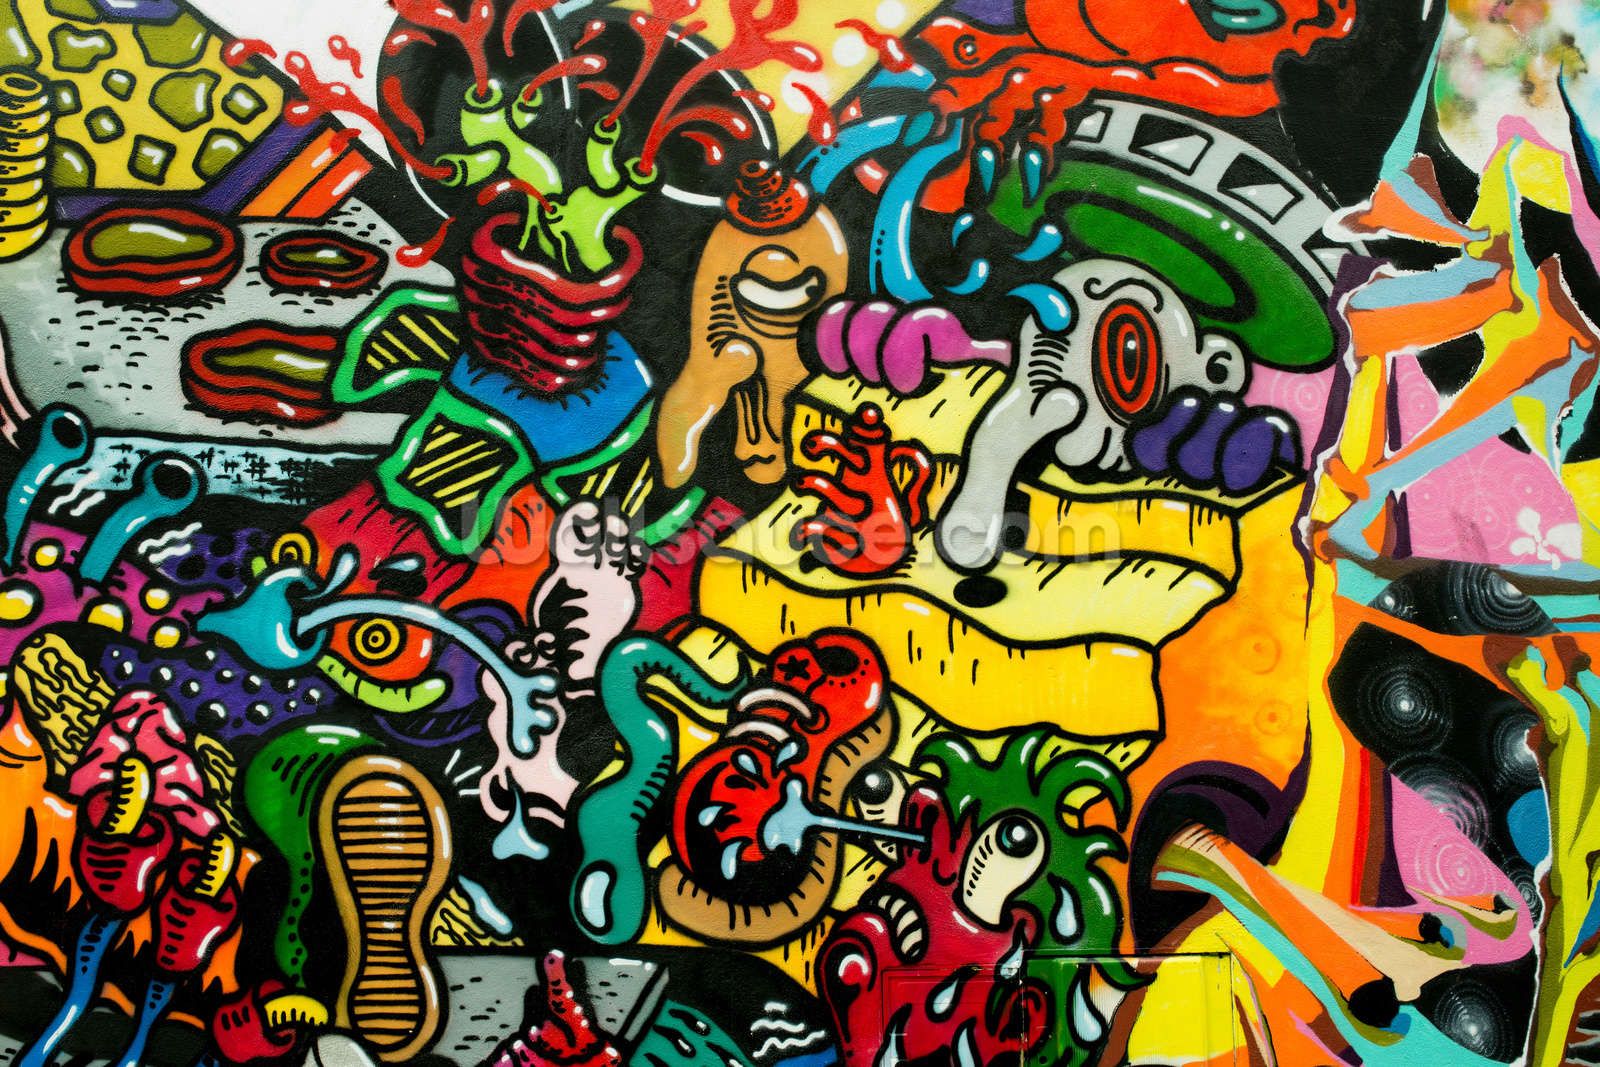 Fondo de pantalla de Graffiti, descarga la imagen de un fantástico hd art urbain